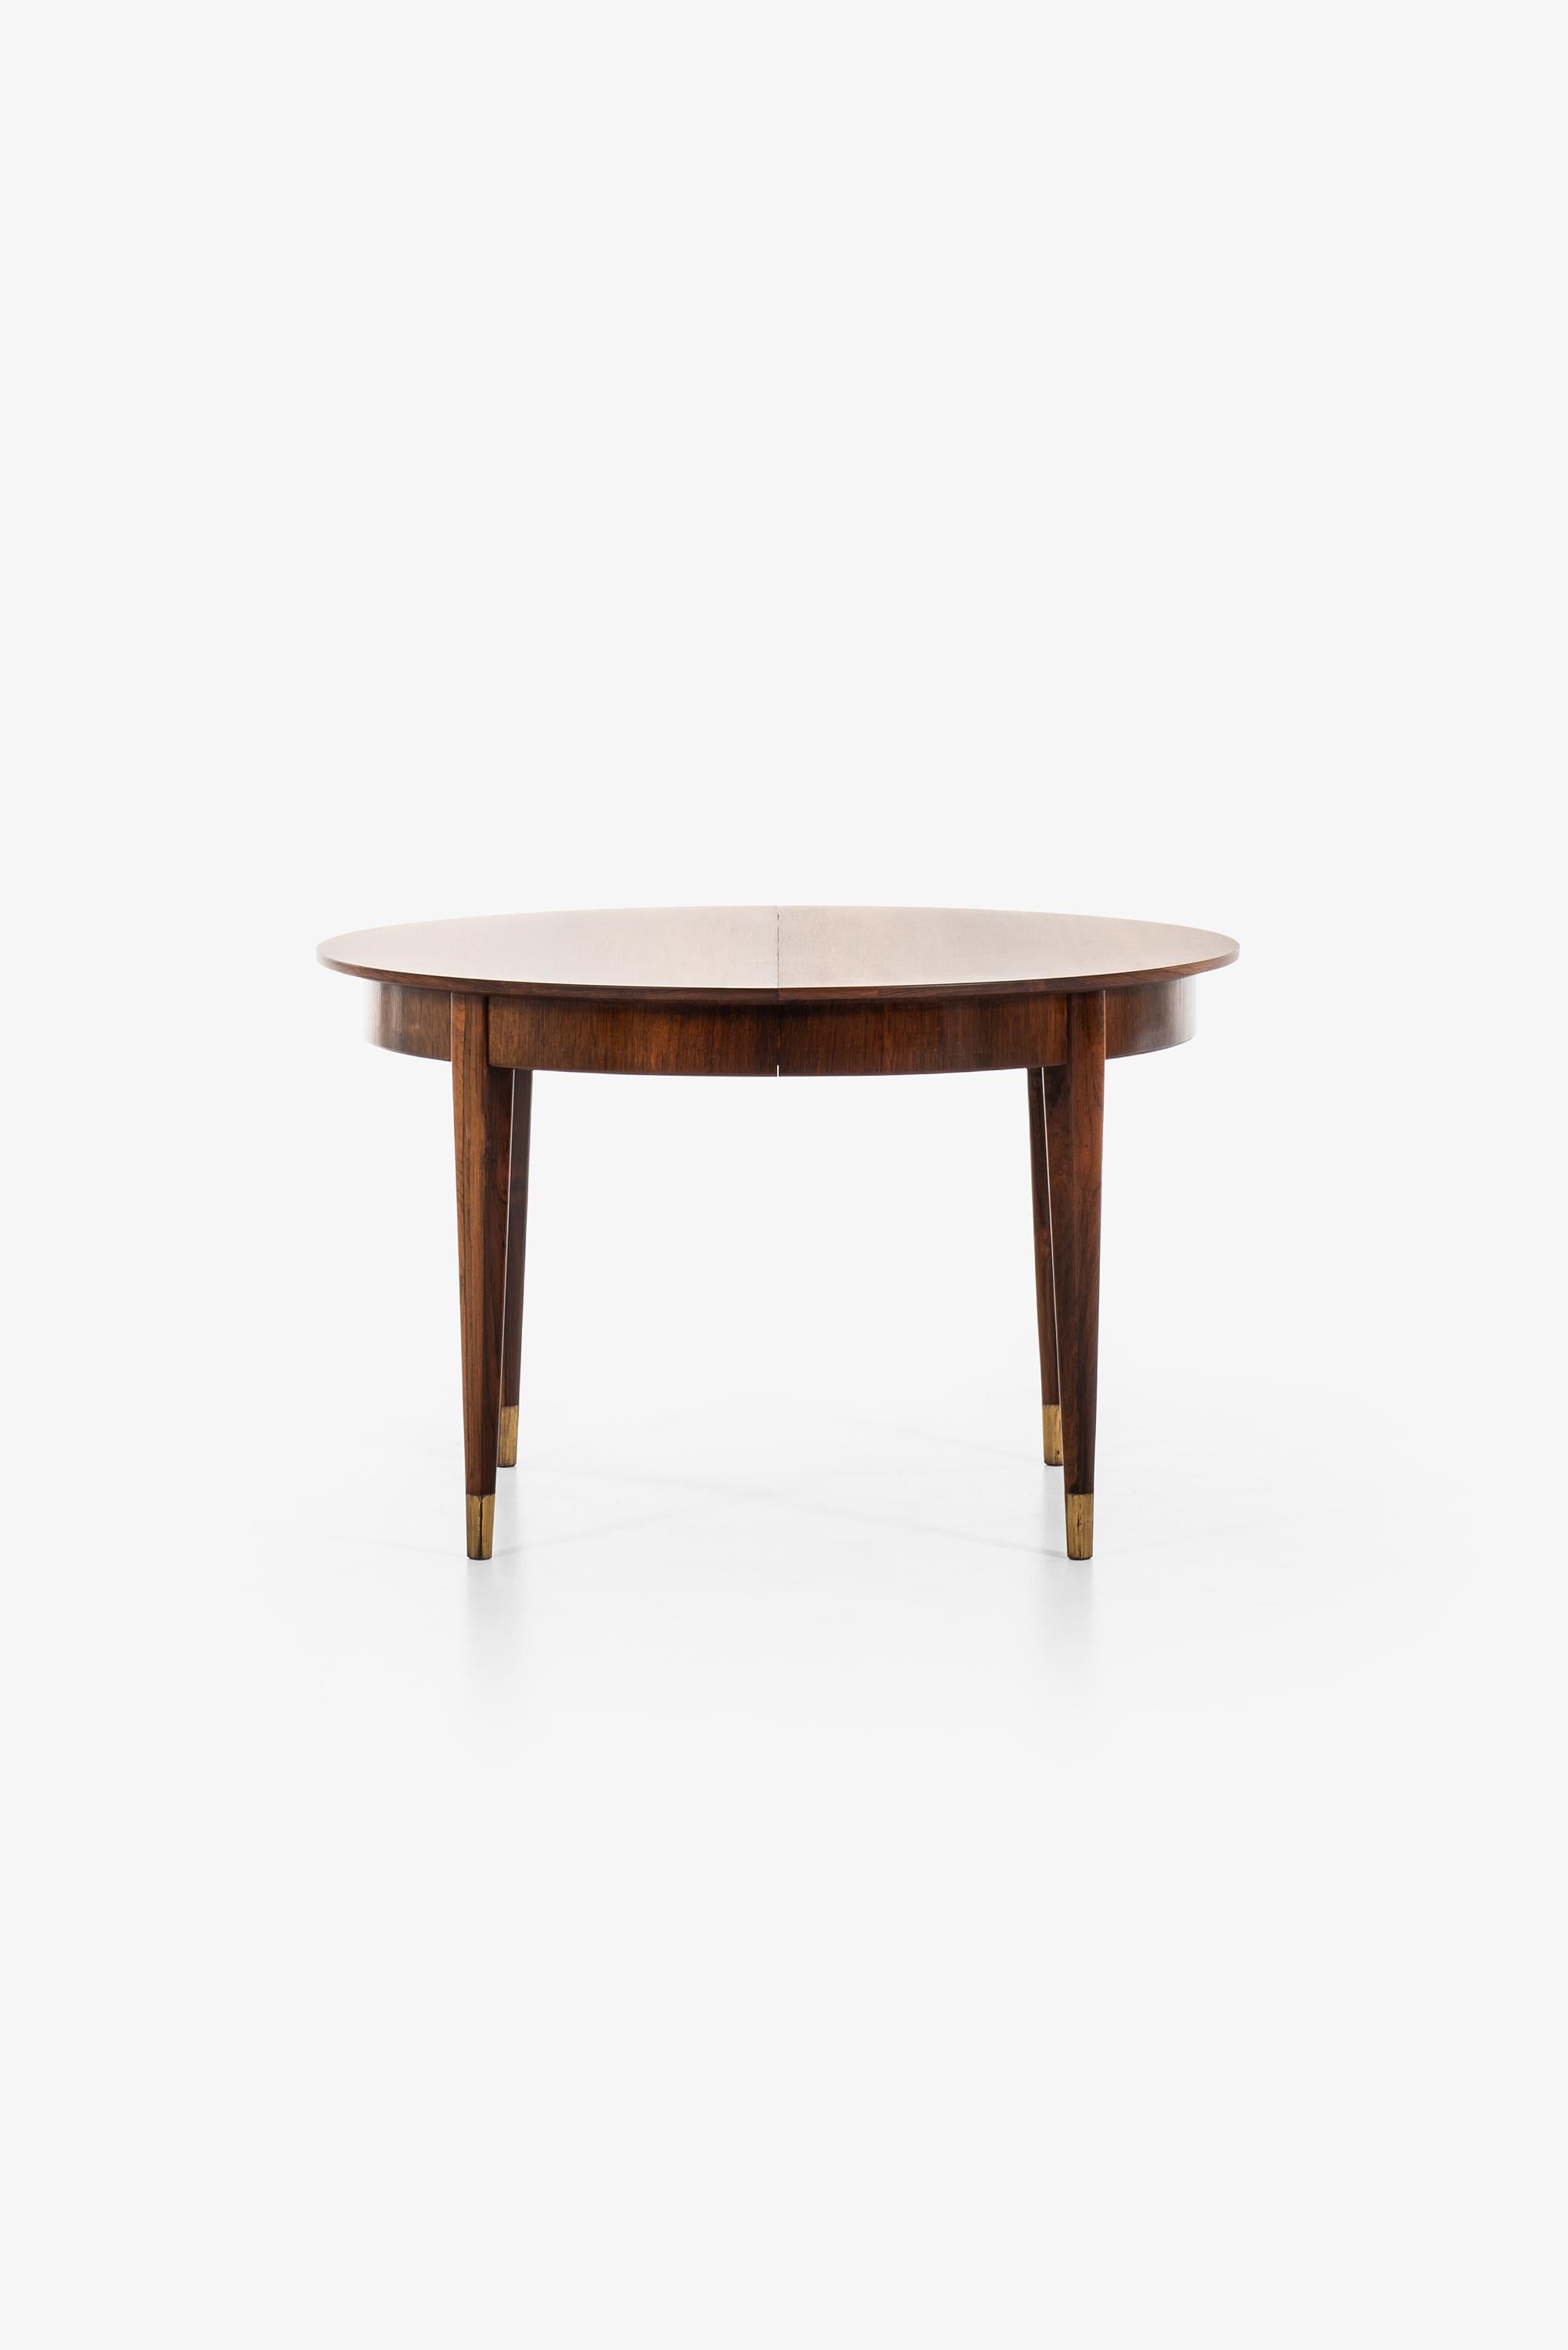 Rare dining table designed by Ernst Kühn. Produced by Lysberg Hansen & Therp in Denmark.